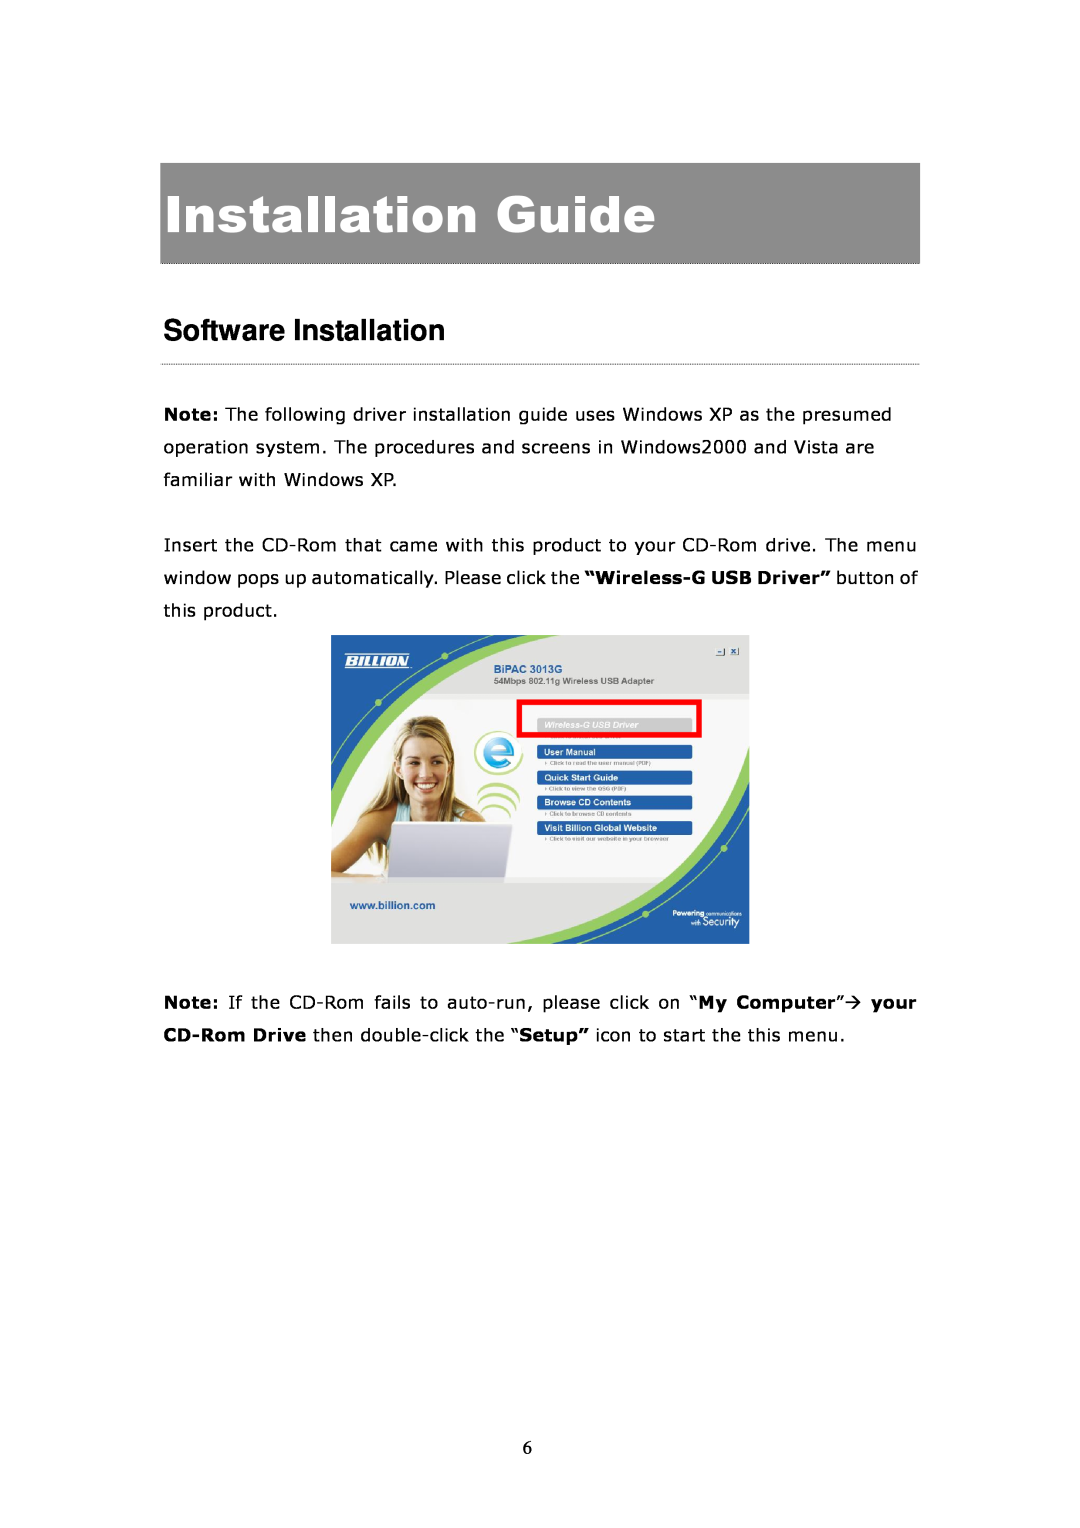 Billion Electric Company 3013G user manual Installation Guide, Software Installation 